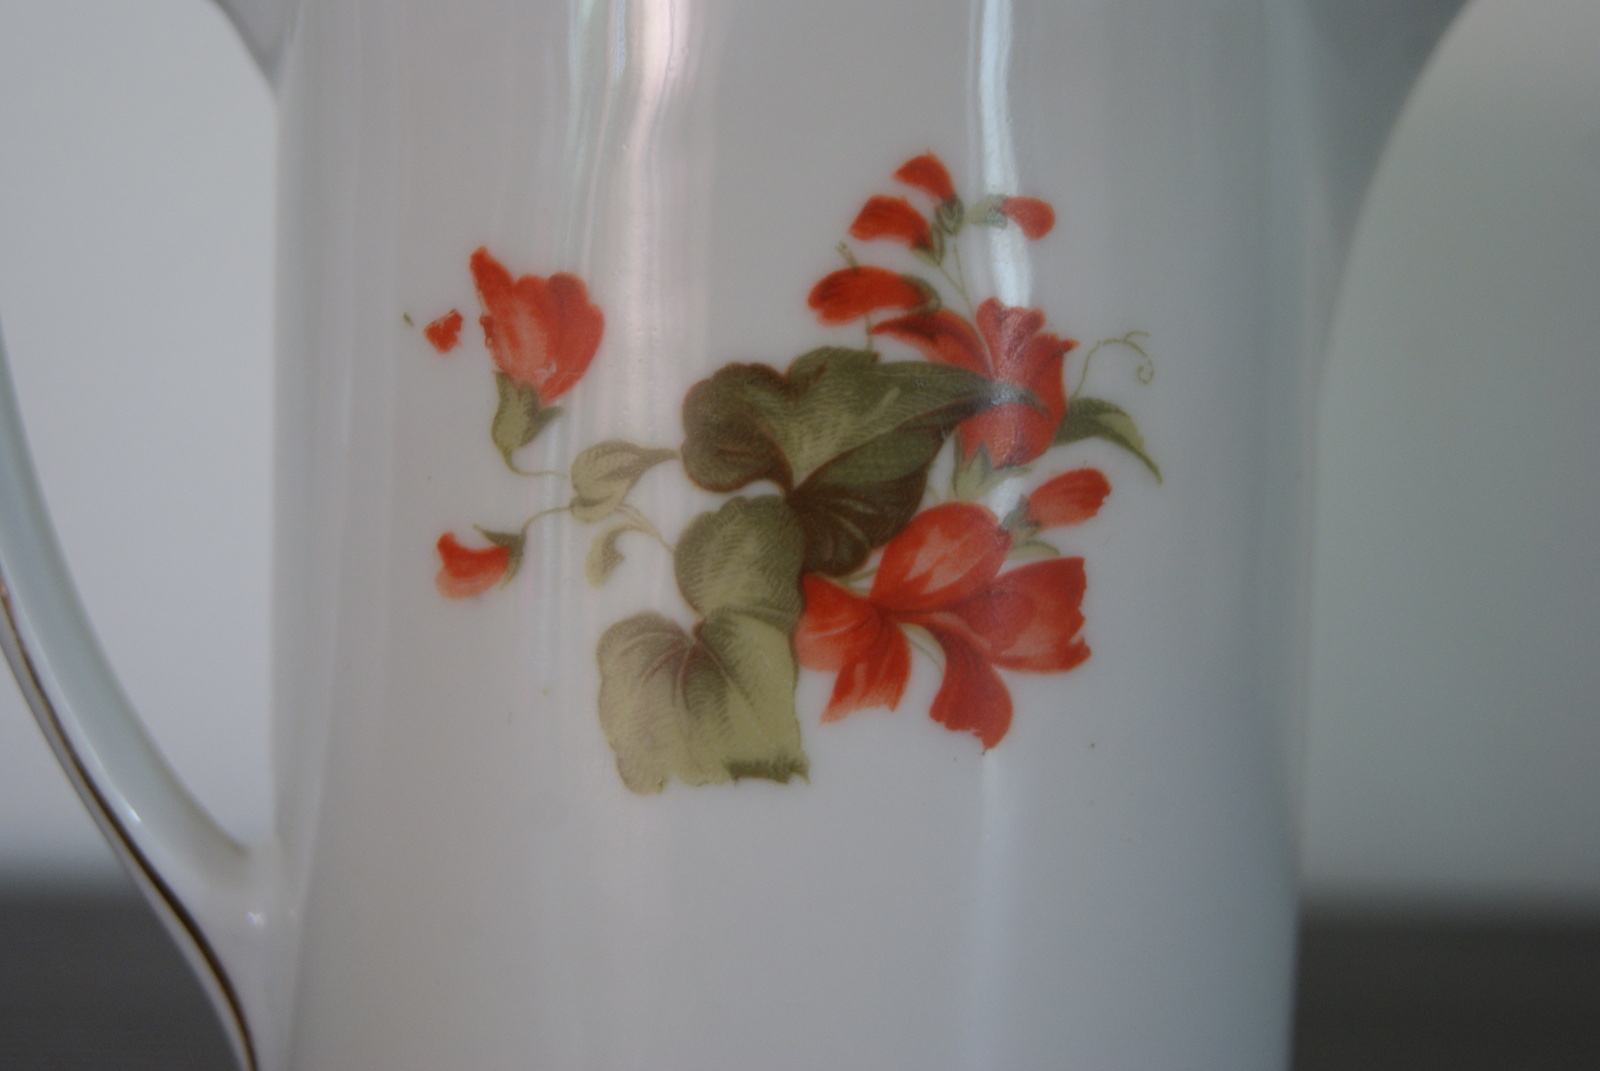 Porsgrund Olaf milk jug with red flowers and leaves